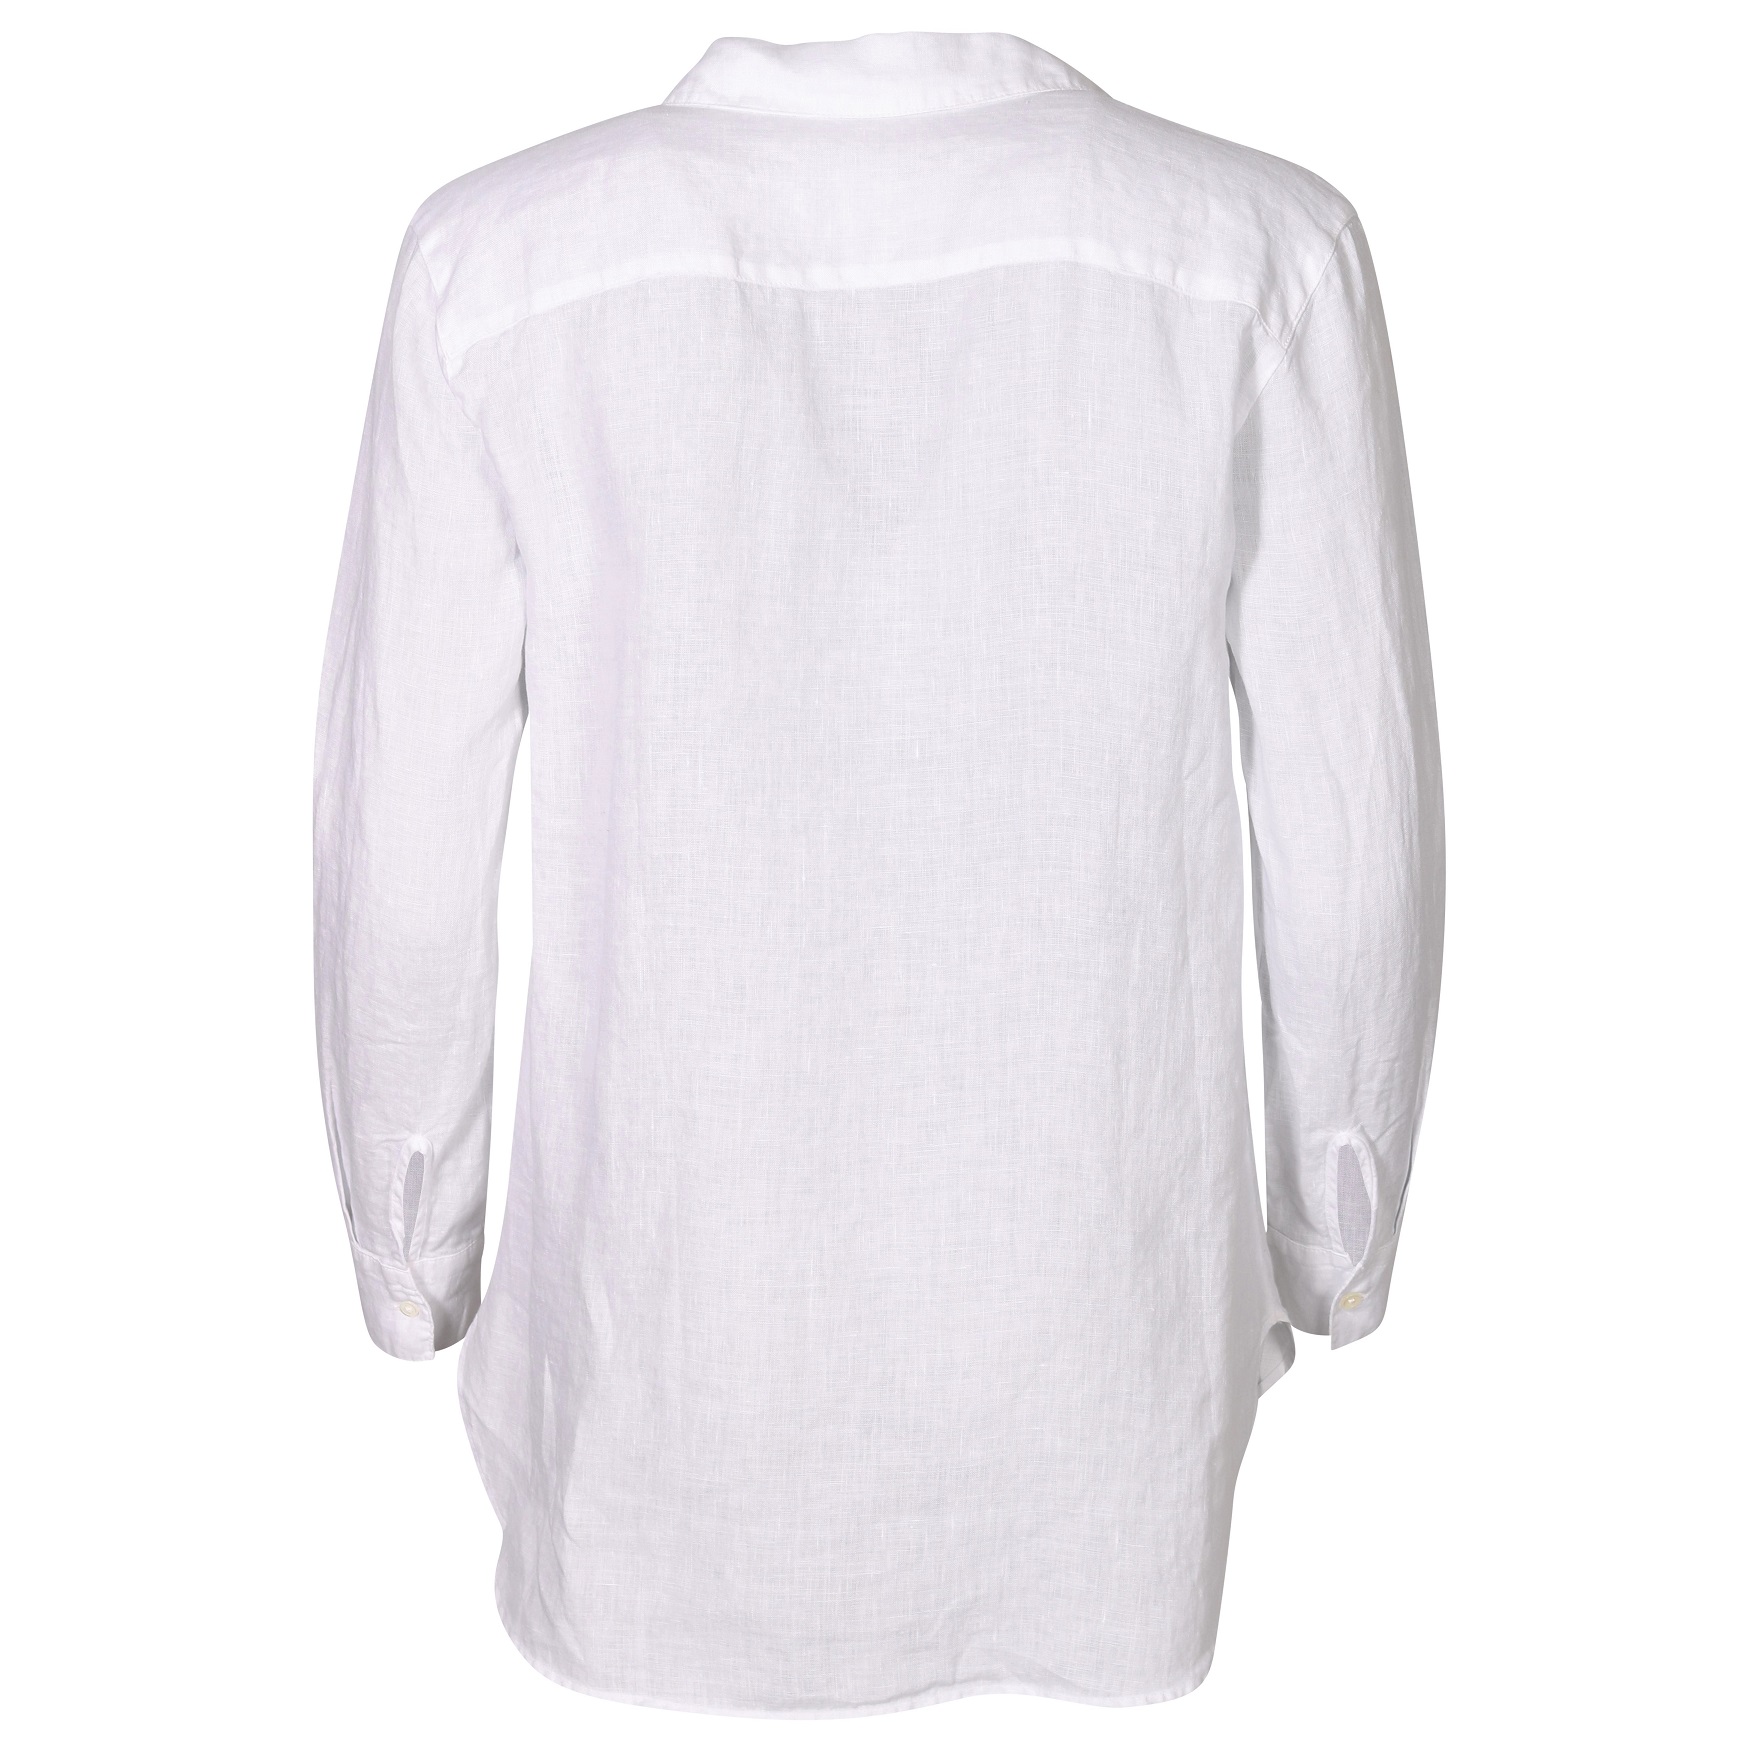 JAMES PERSE Light Weight Linen Shirt in White 0/XS